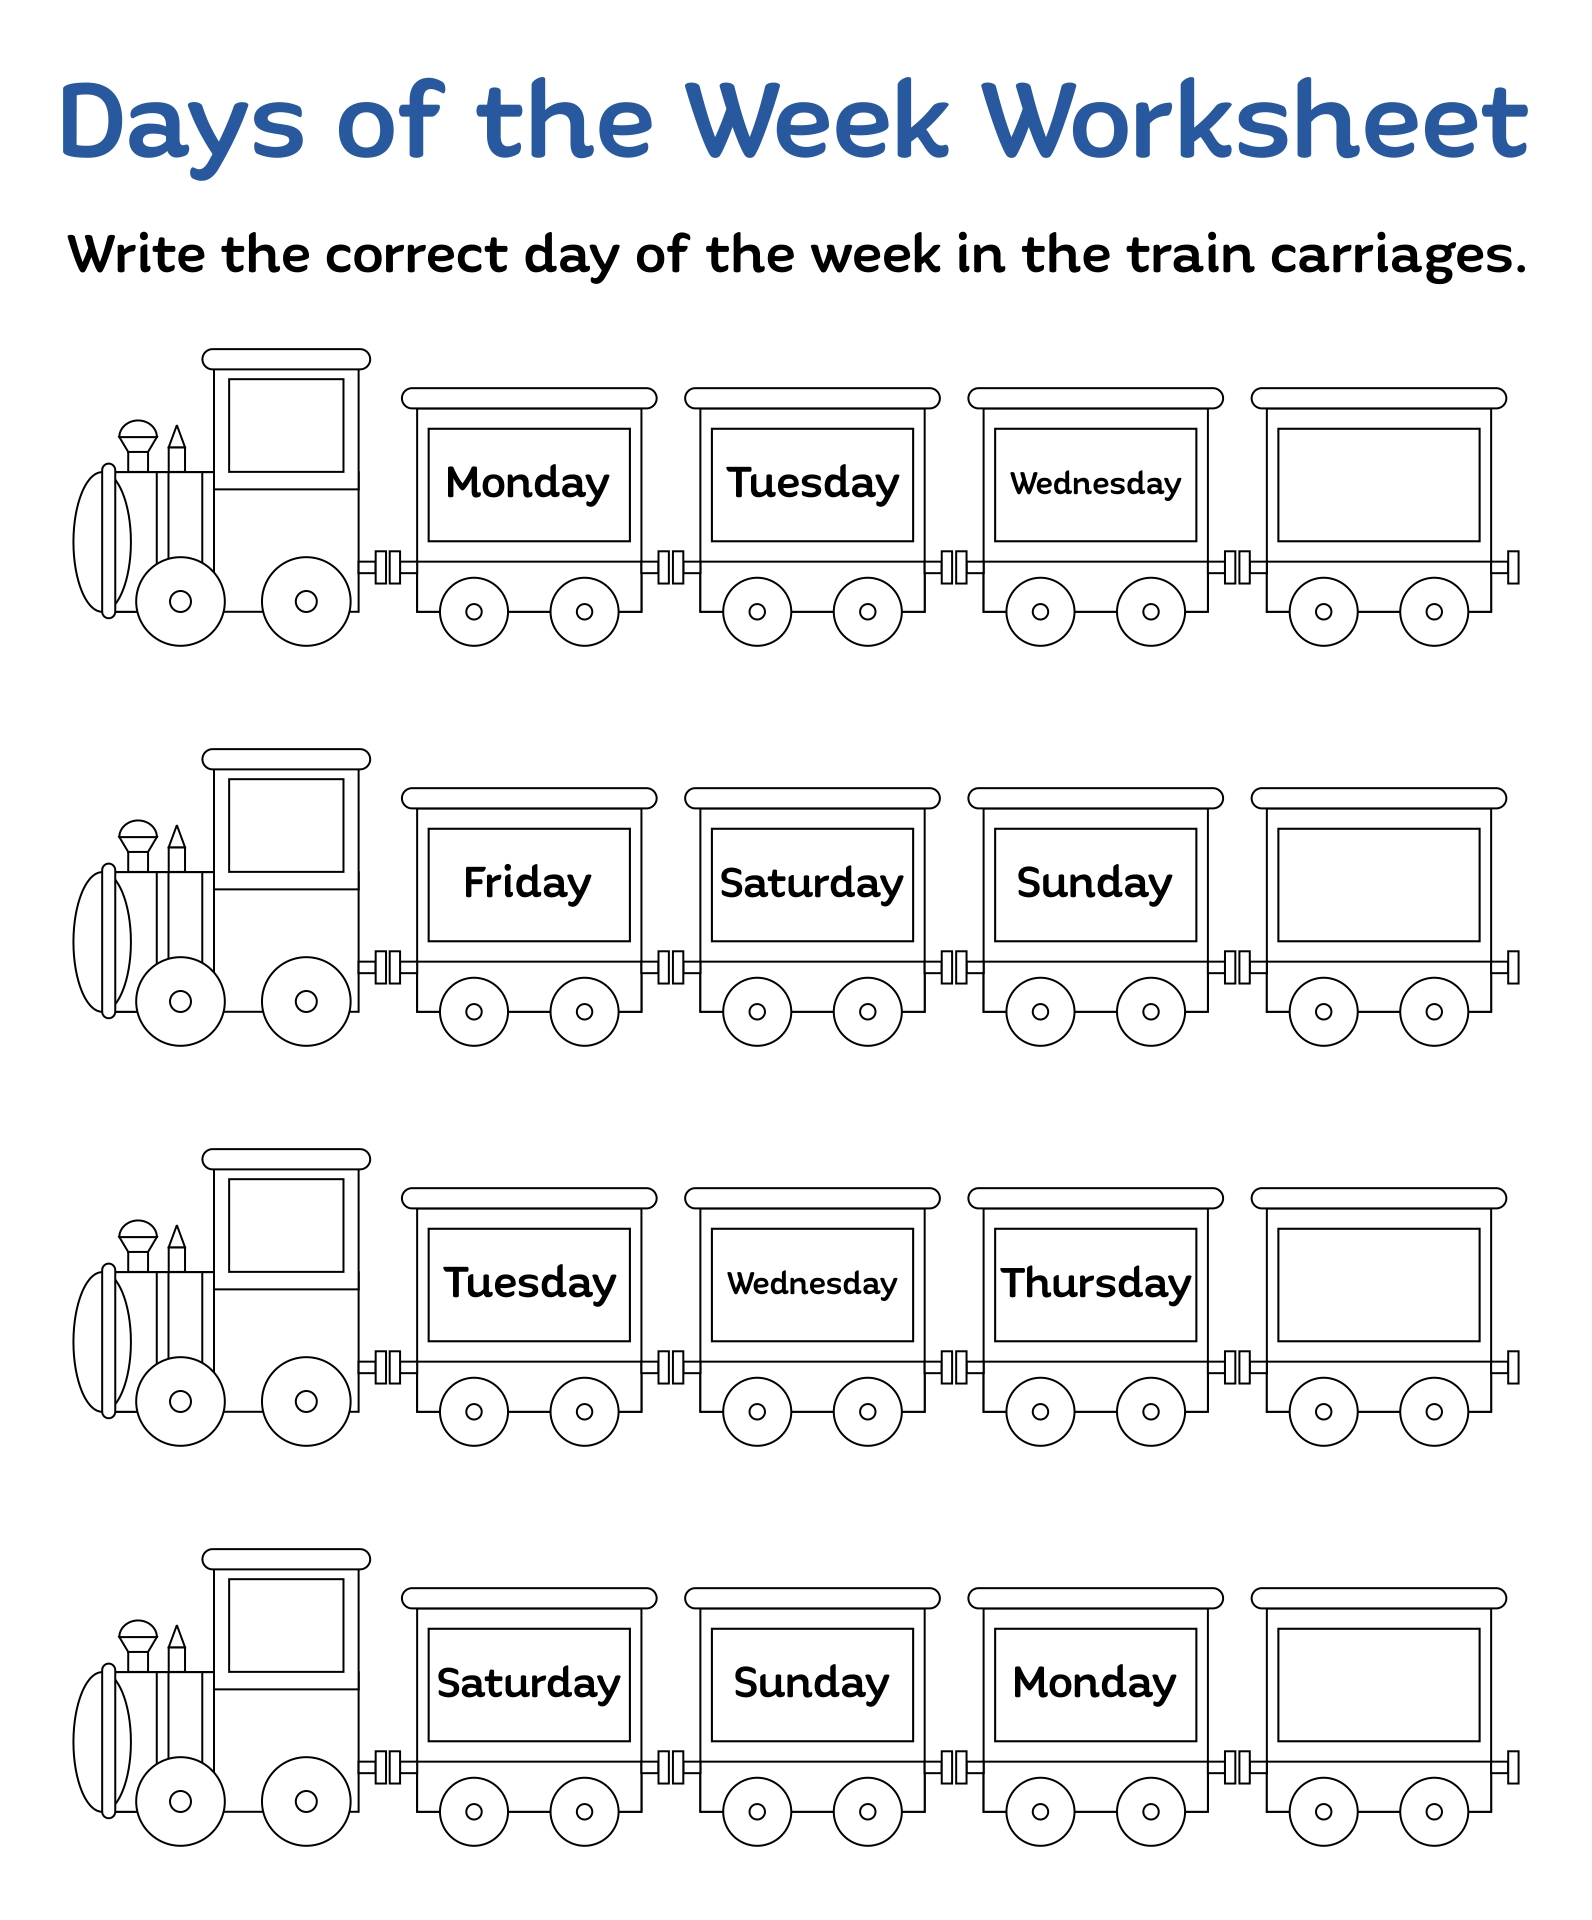 Train Days of the Week Worksheet